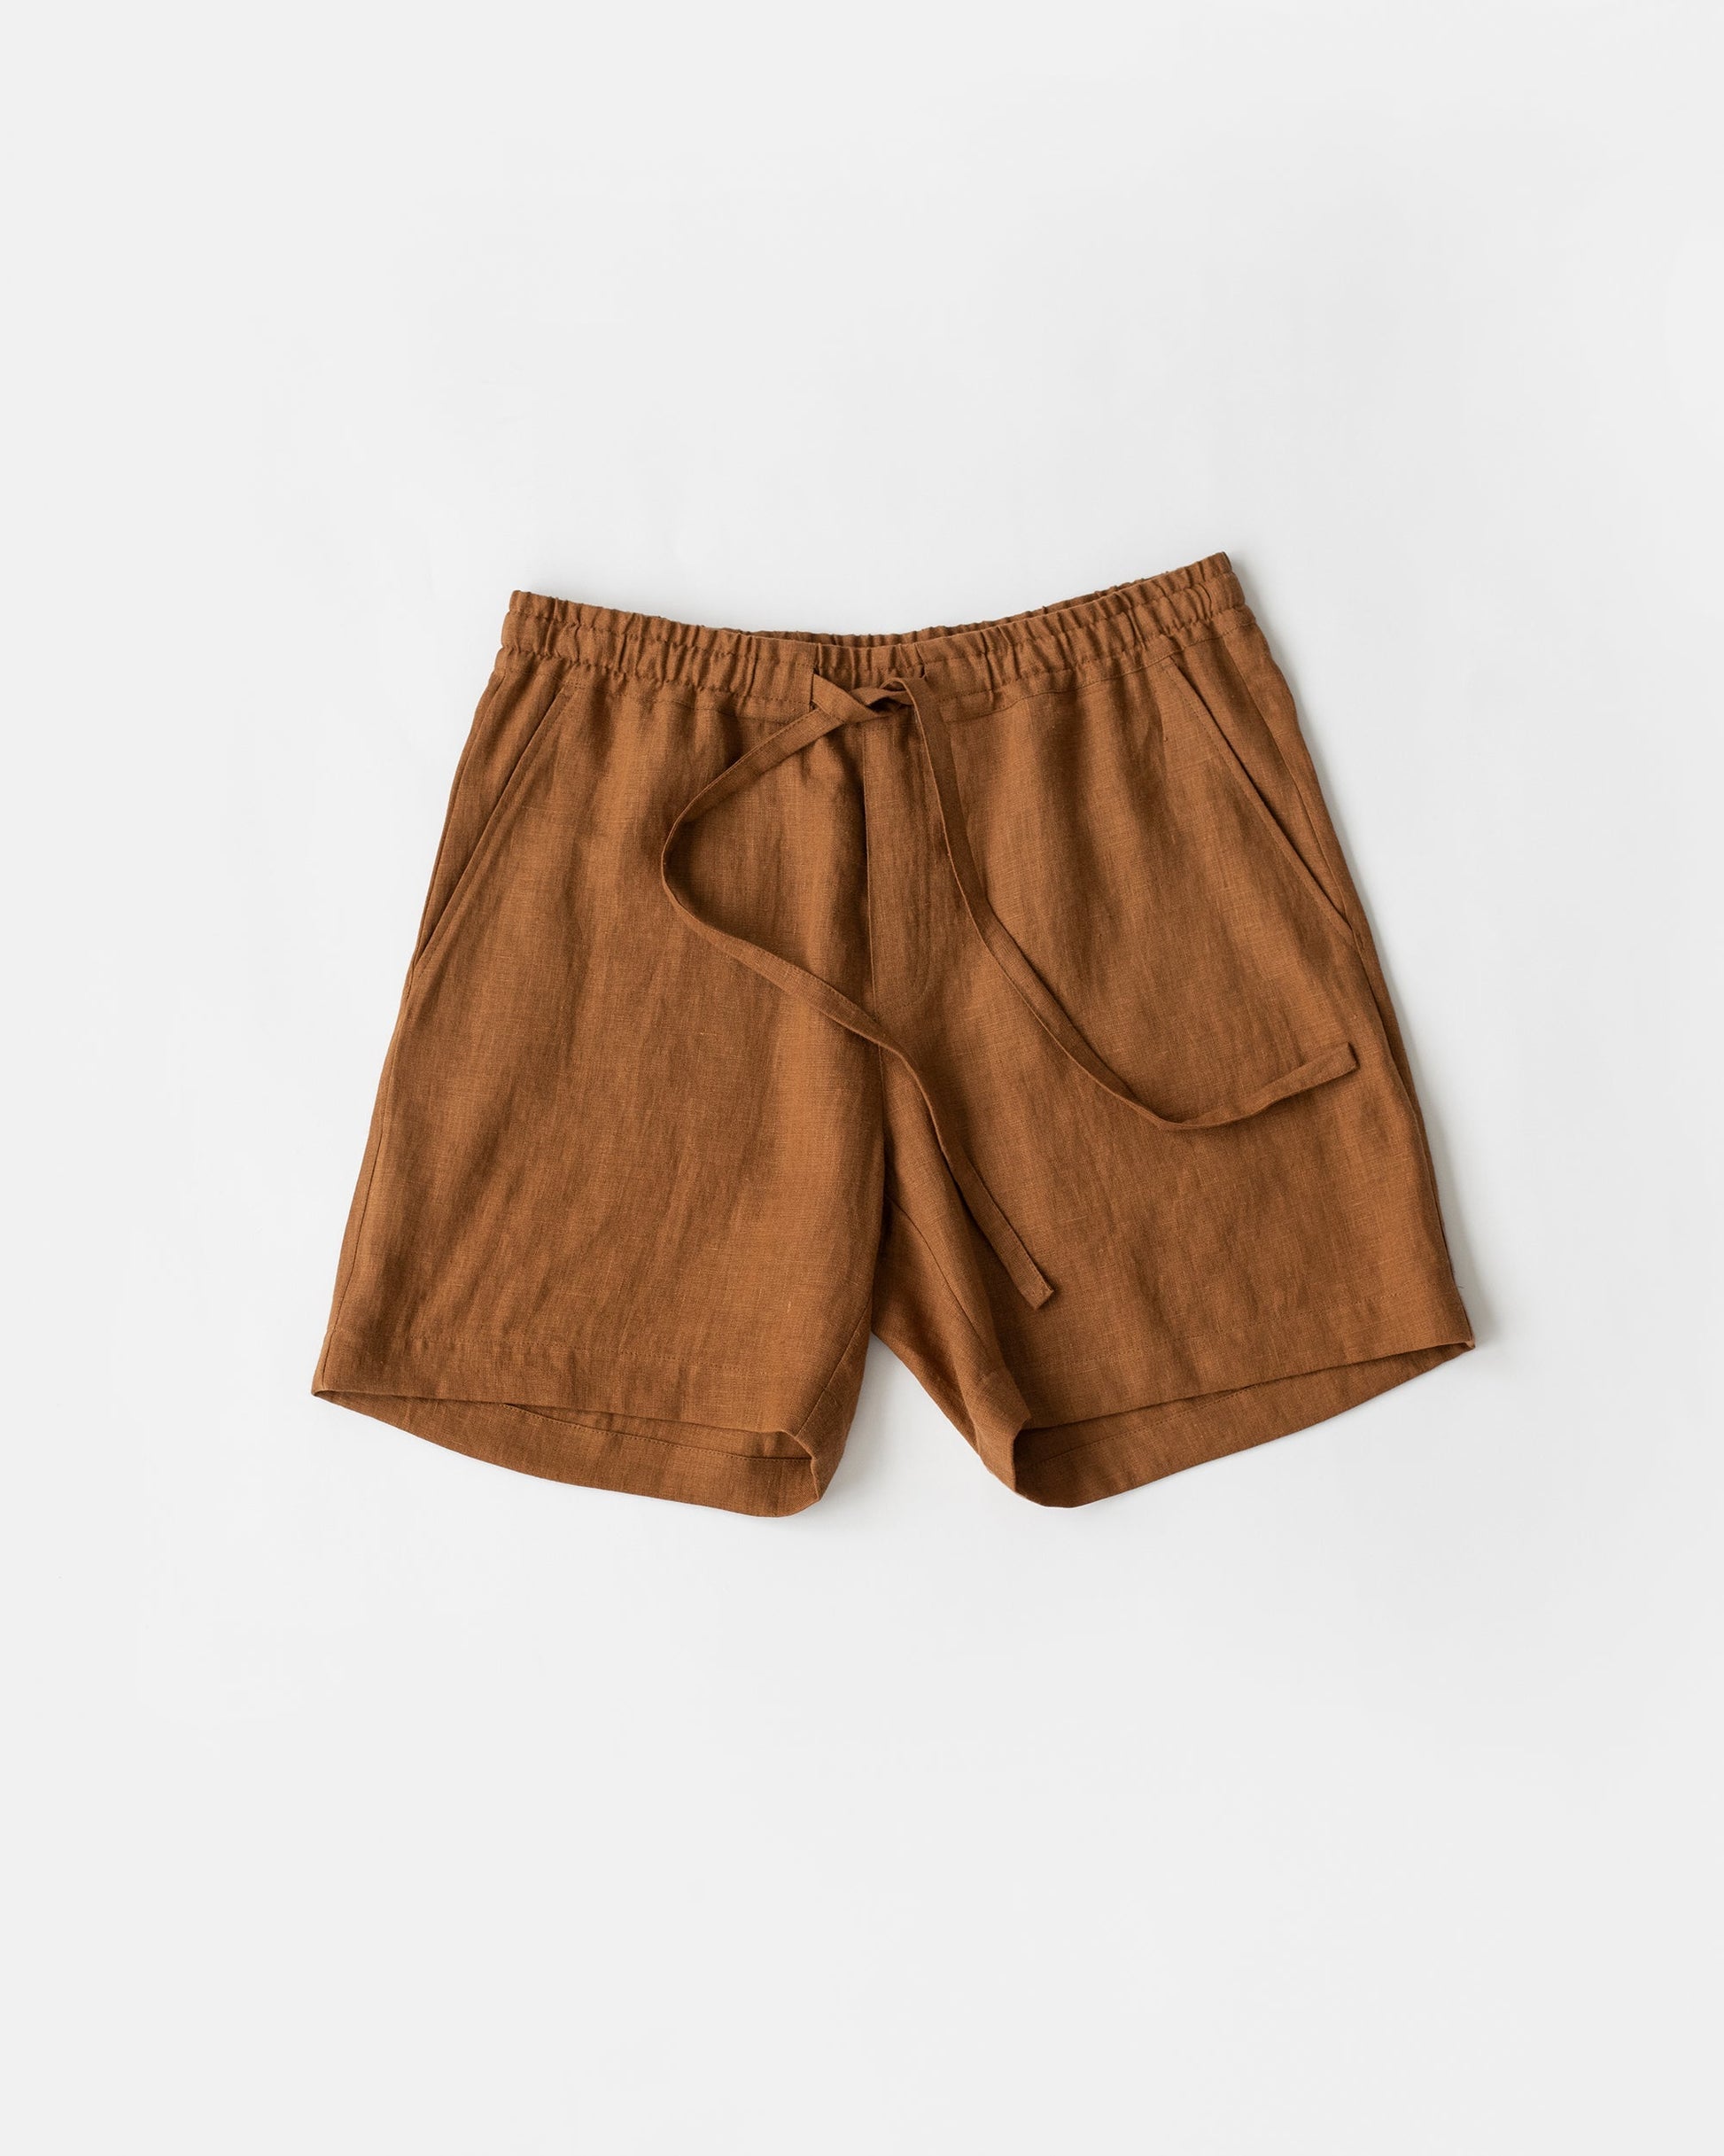 Men's linen shorts STOWE in Cinnamon - MagicLinen